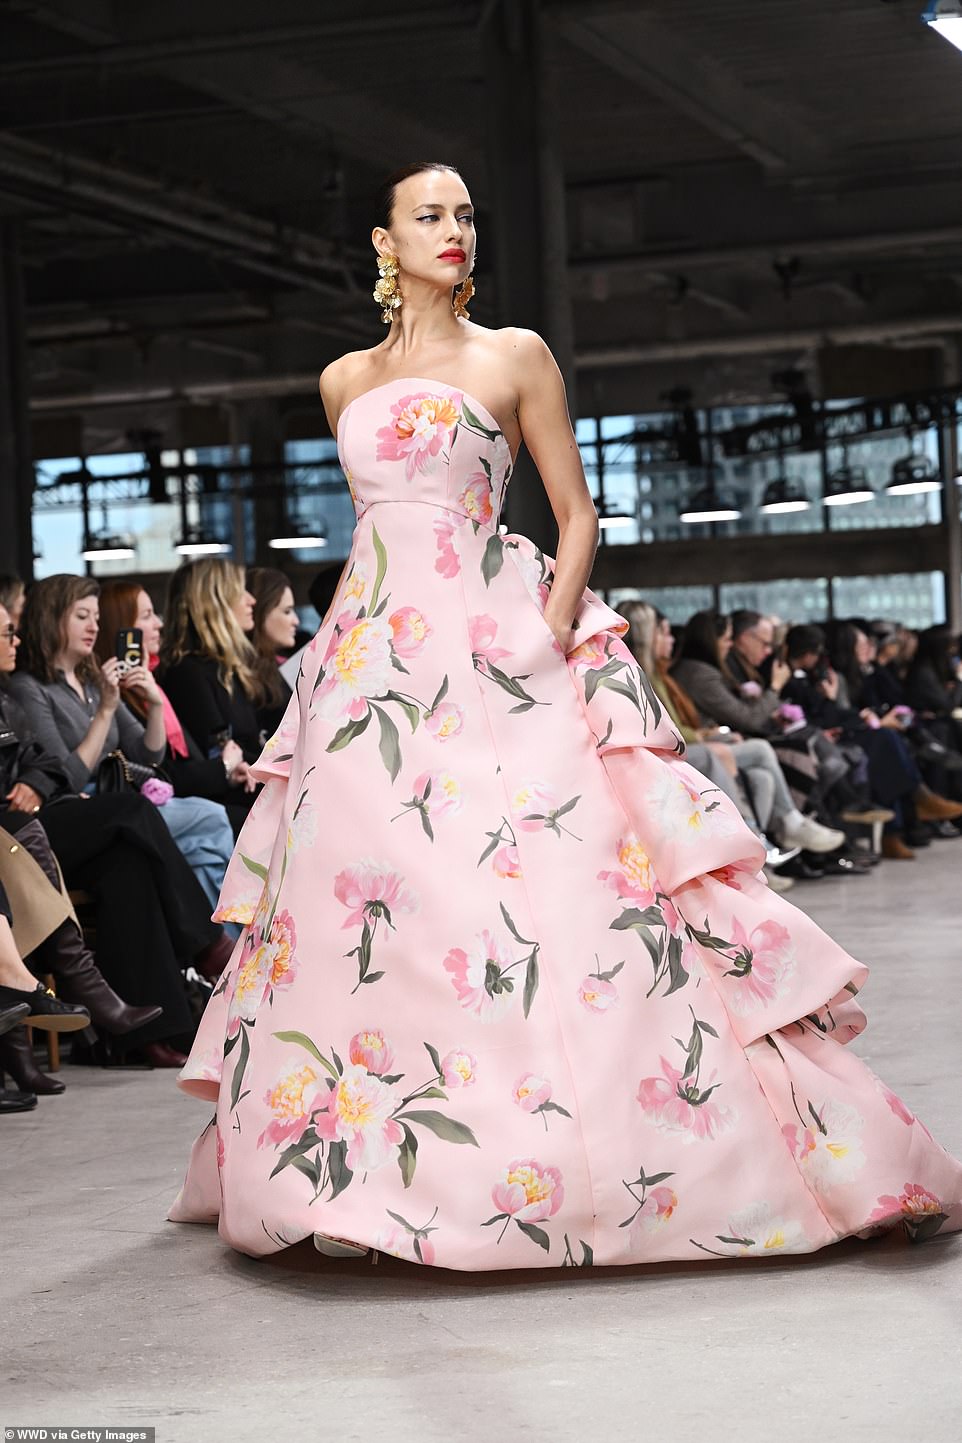 Supermodel Irina Shayk walked for Carolina Herrera looking statuesque as she glided down the runway.